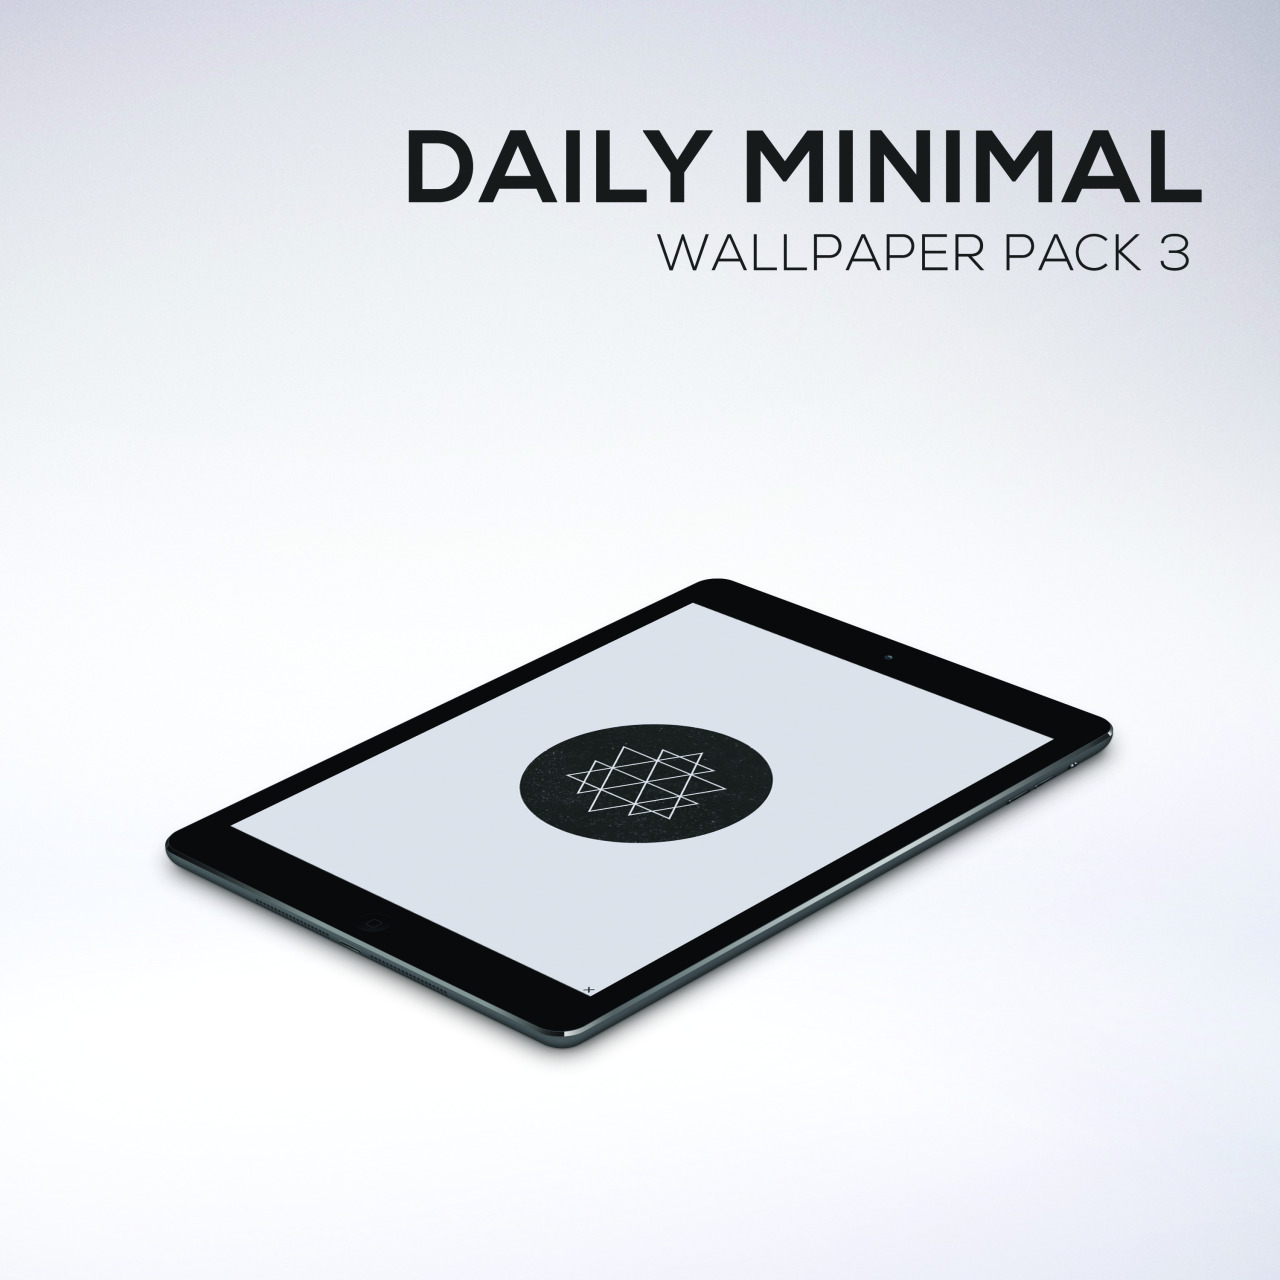 Wallpaper Pack 3
13 Free Wallpapers For Iphone, Ipad, - Circle - HD Wallpaper 